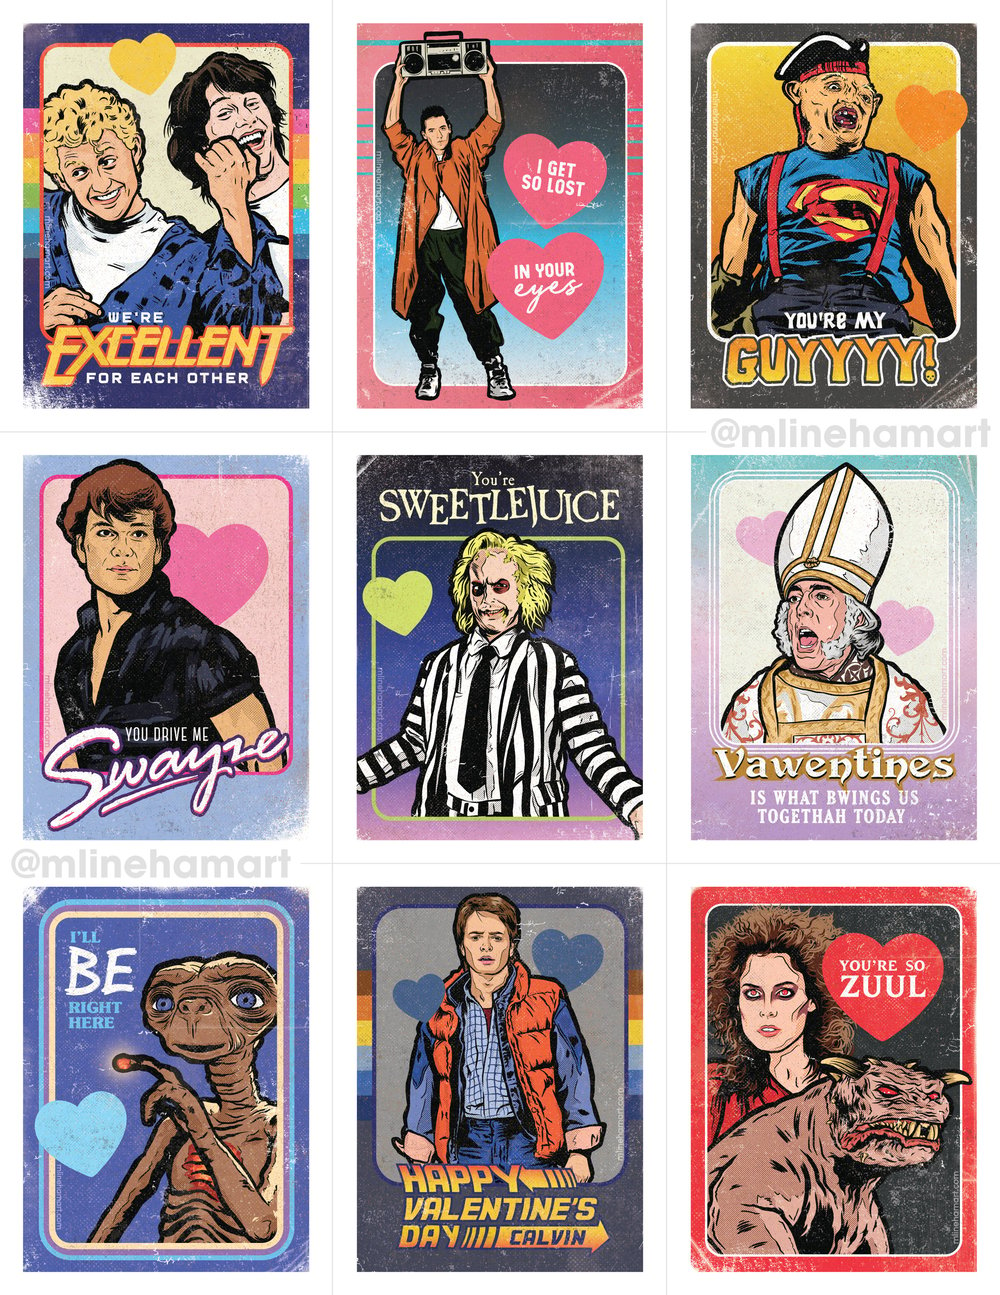 classic-80s-movies-valentine-s-day-card-pack-2019-m-lineham-art